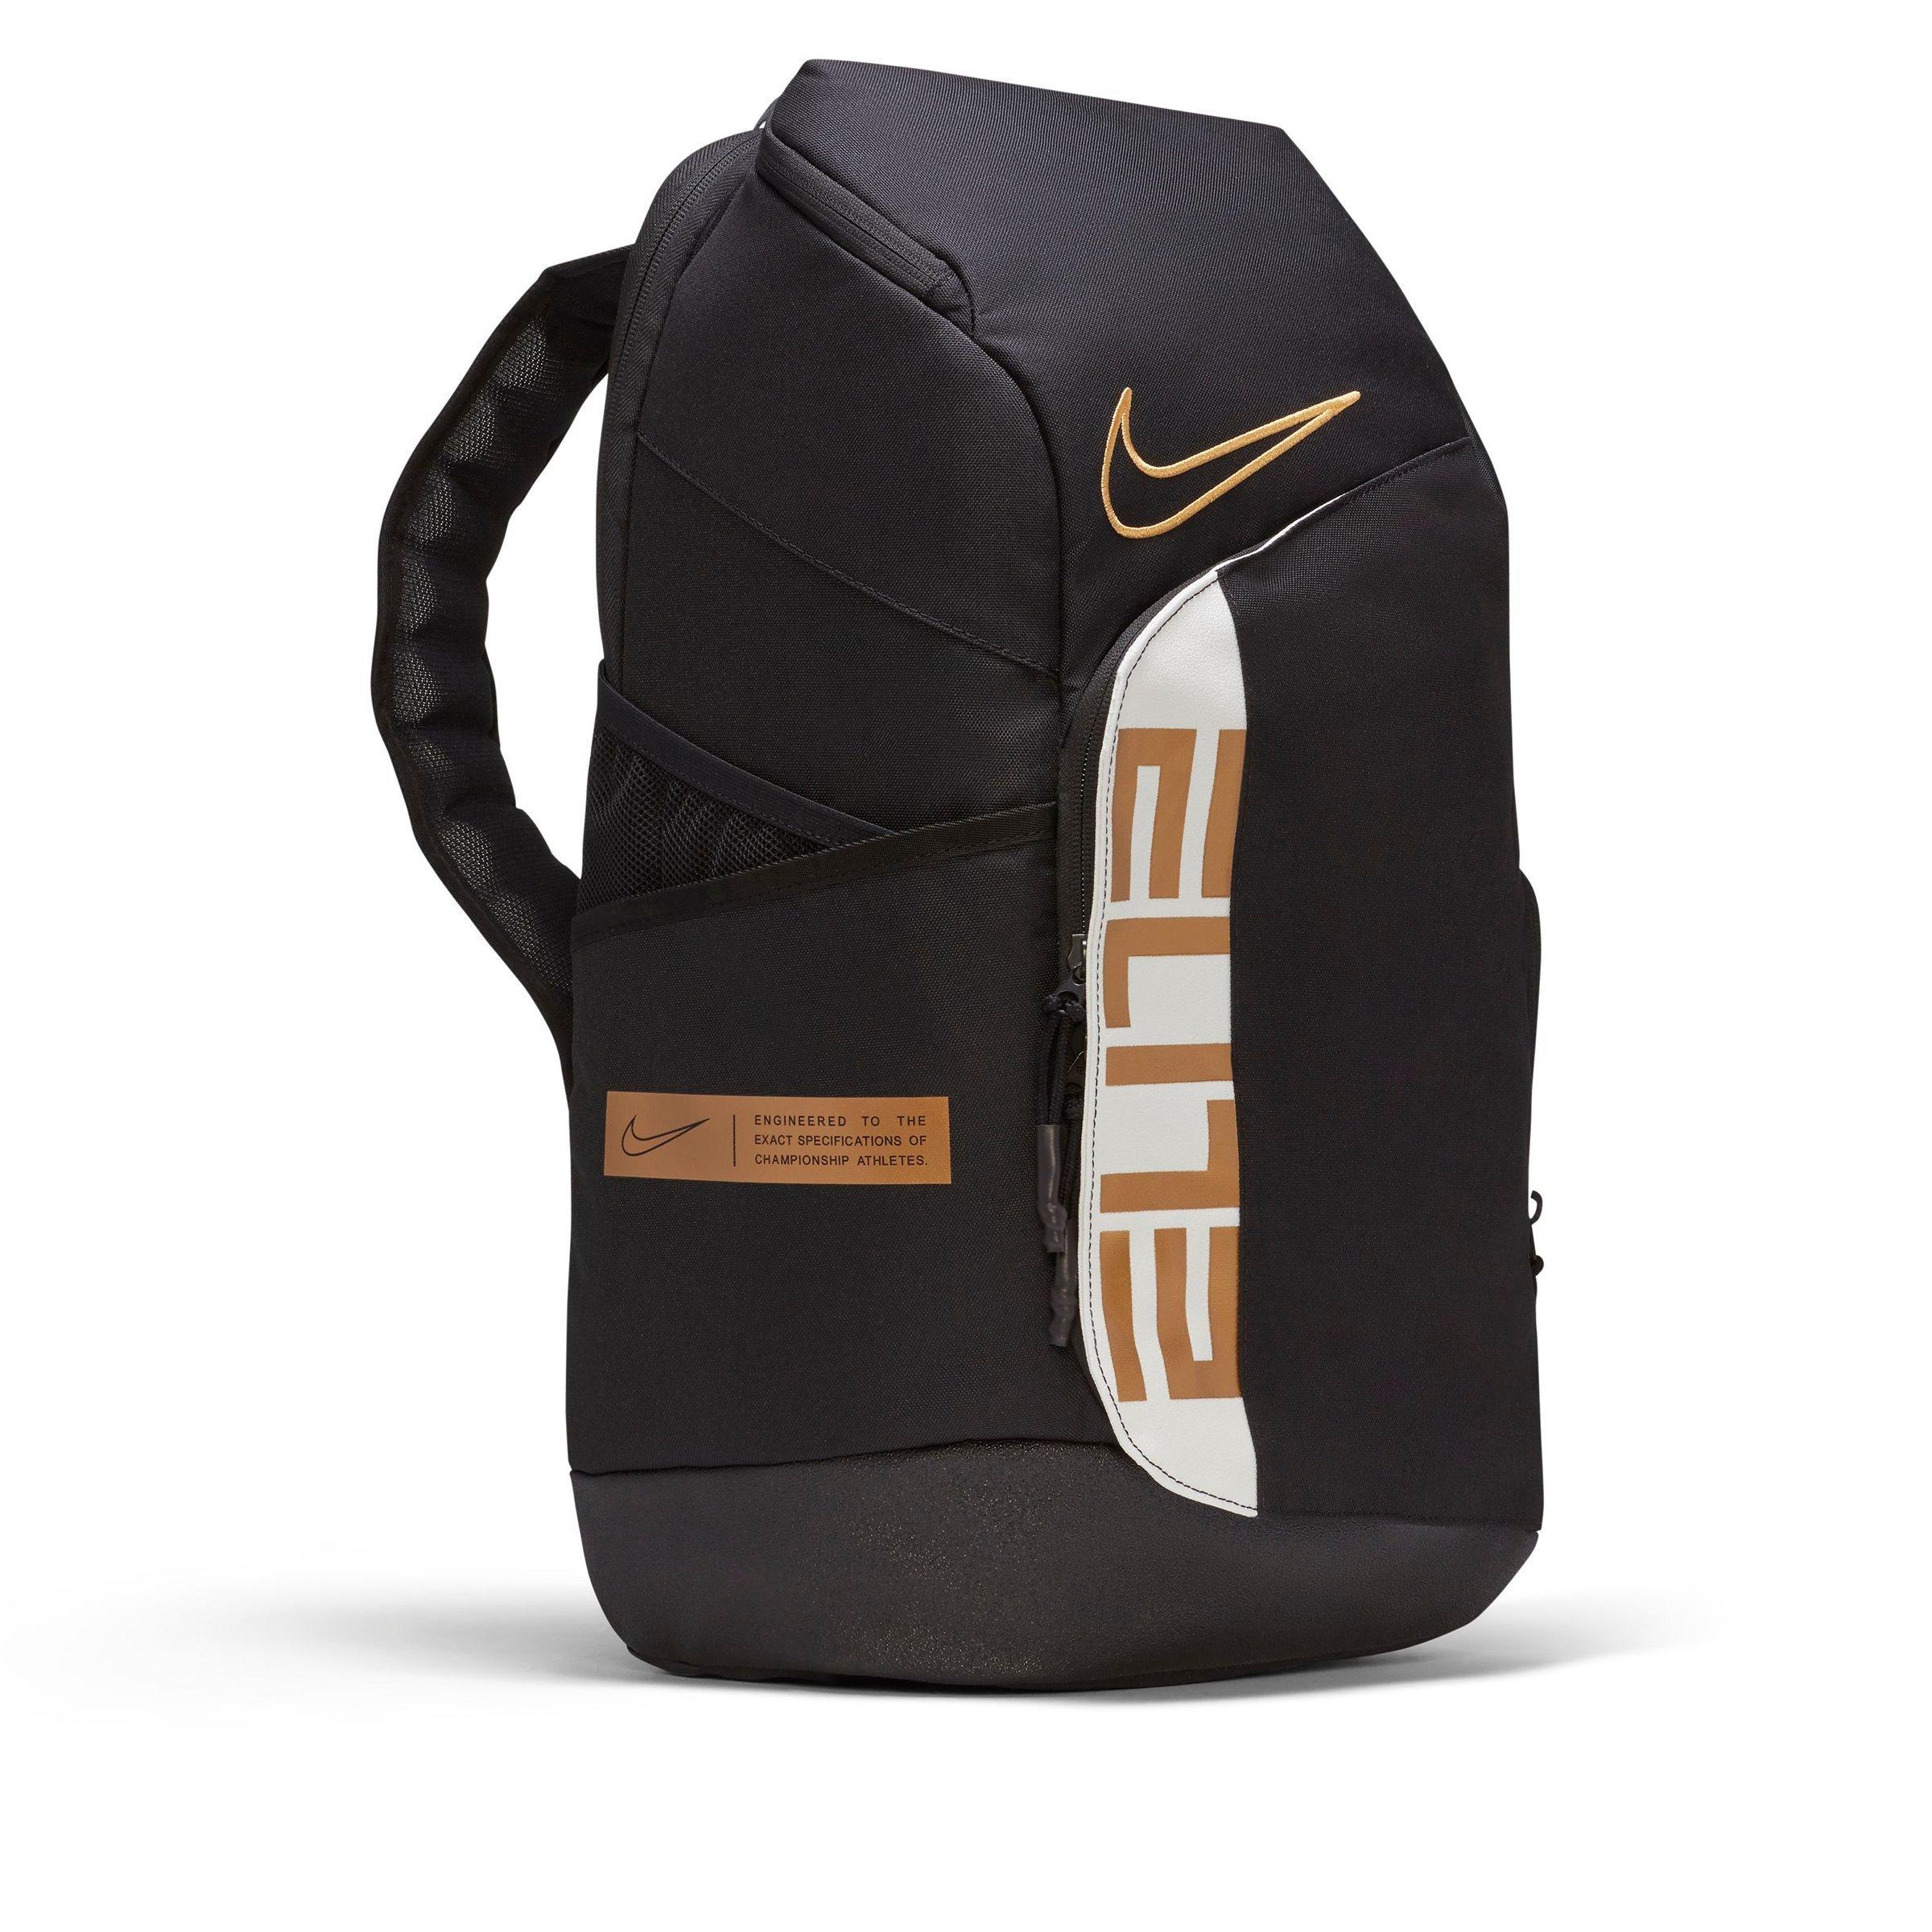 black and gold nike elite bag